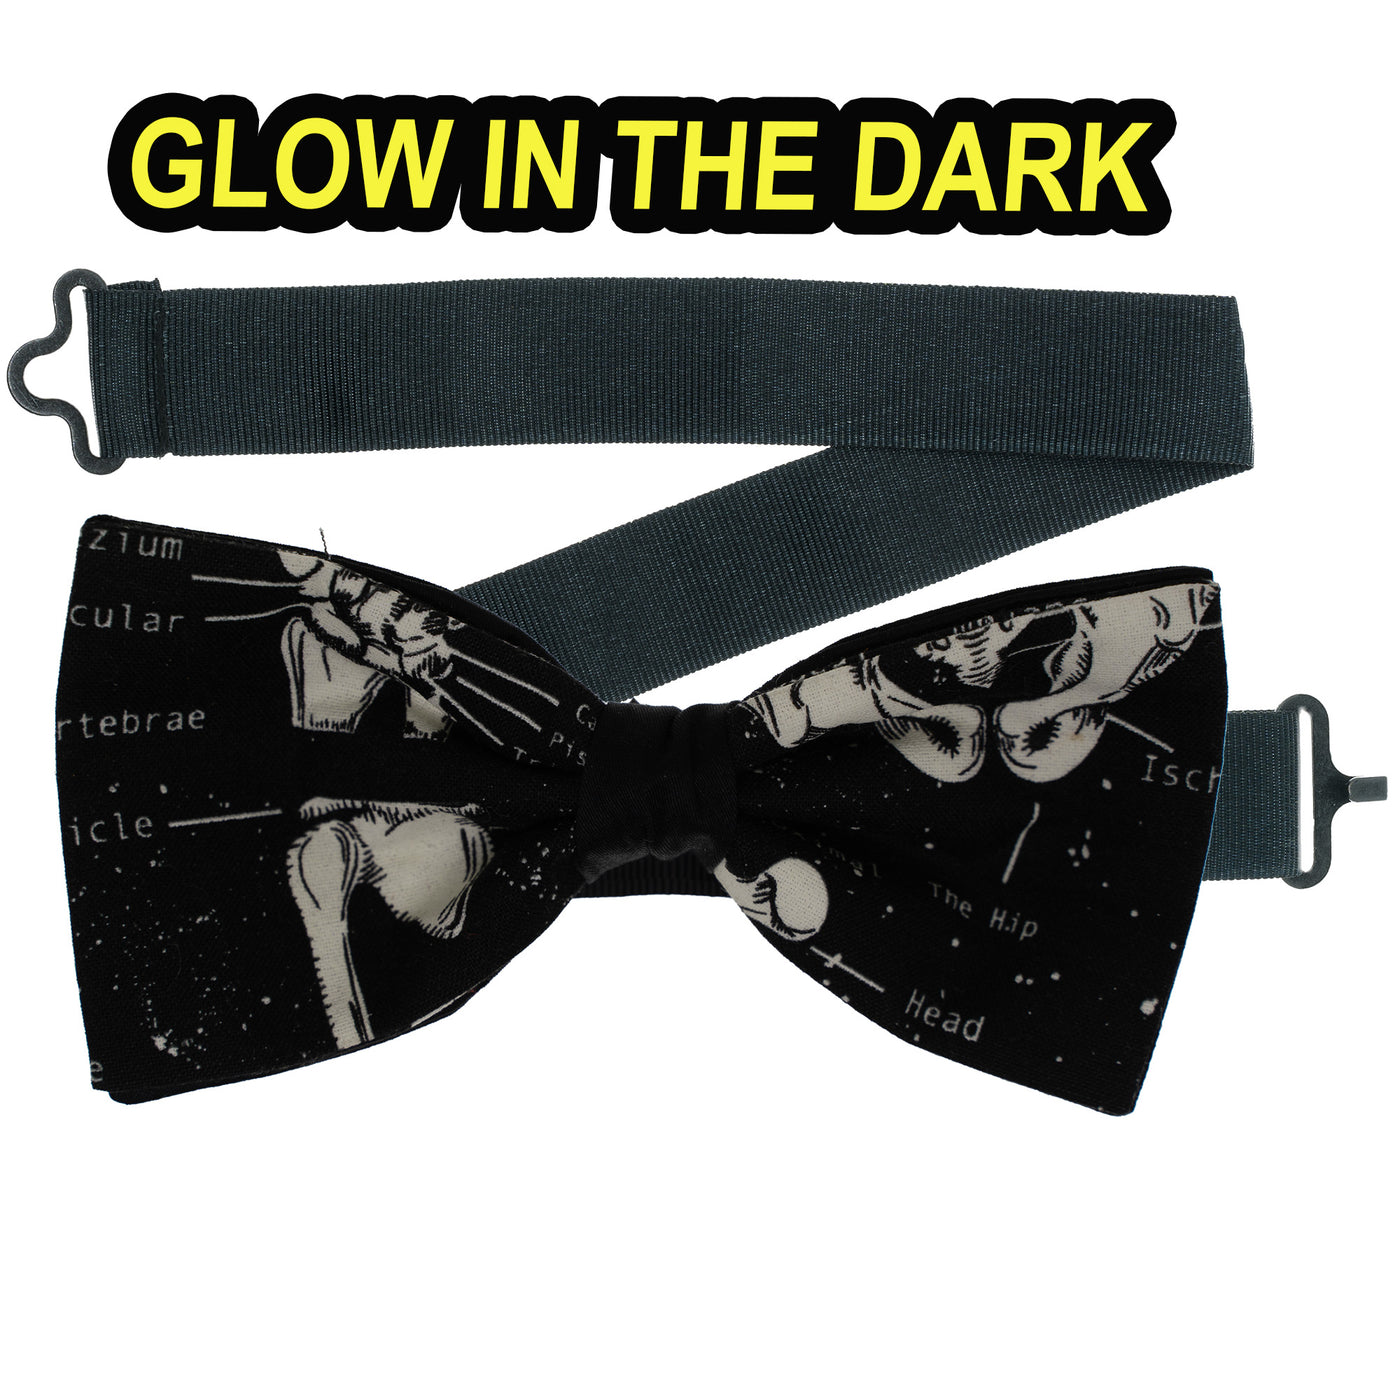 Glow in the dark Skeleton Bow Tie